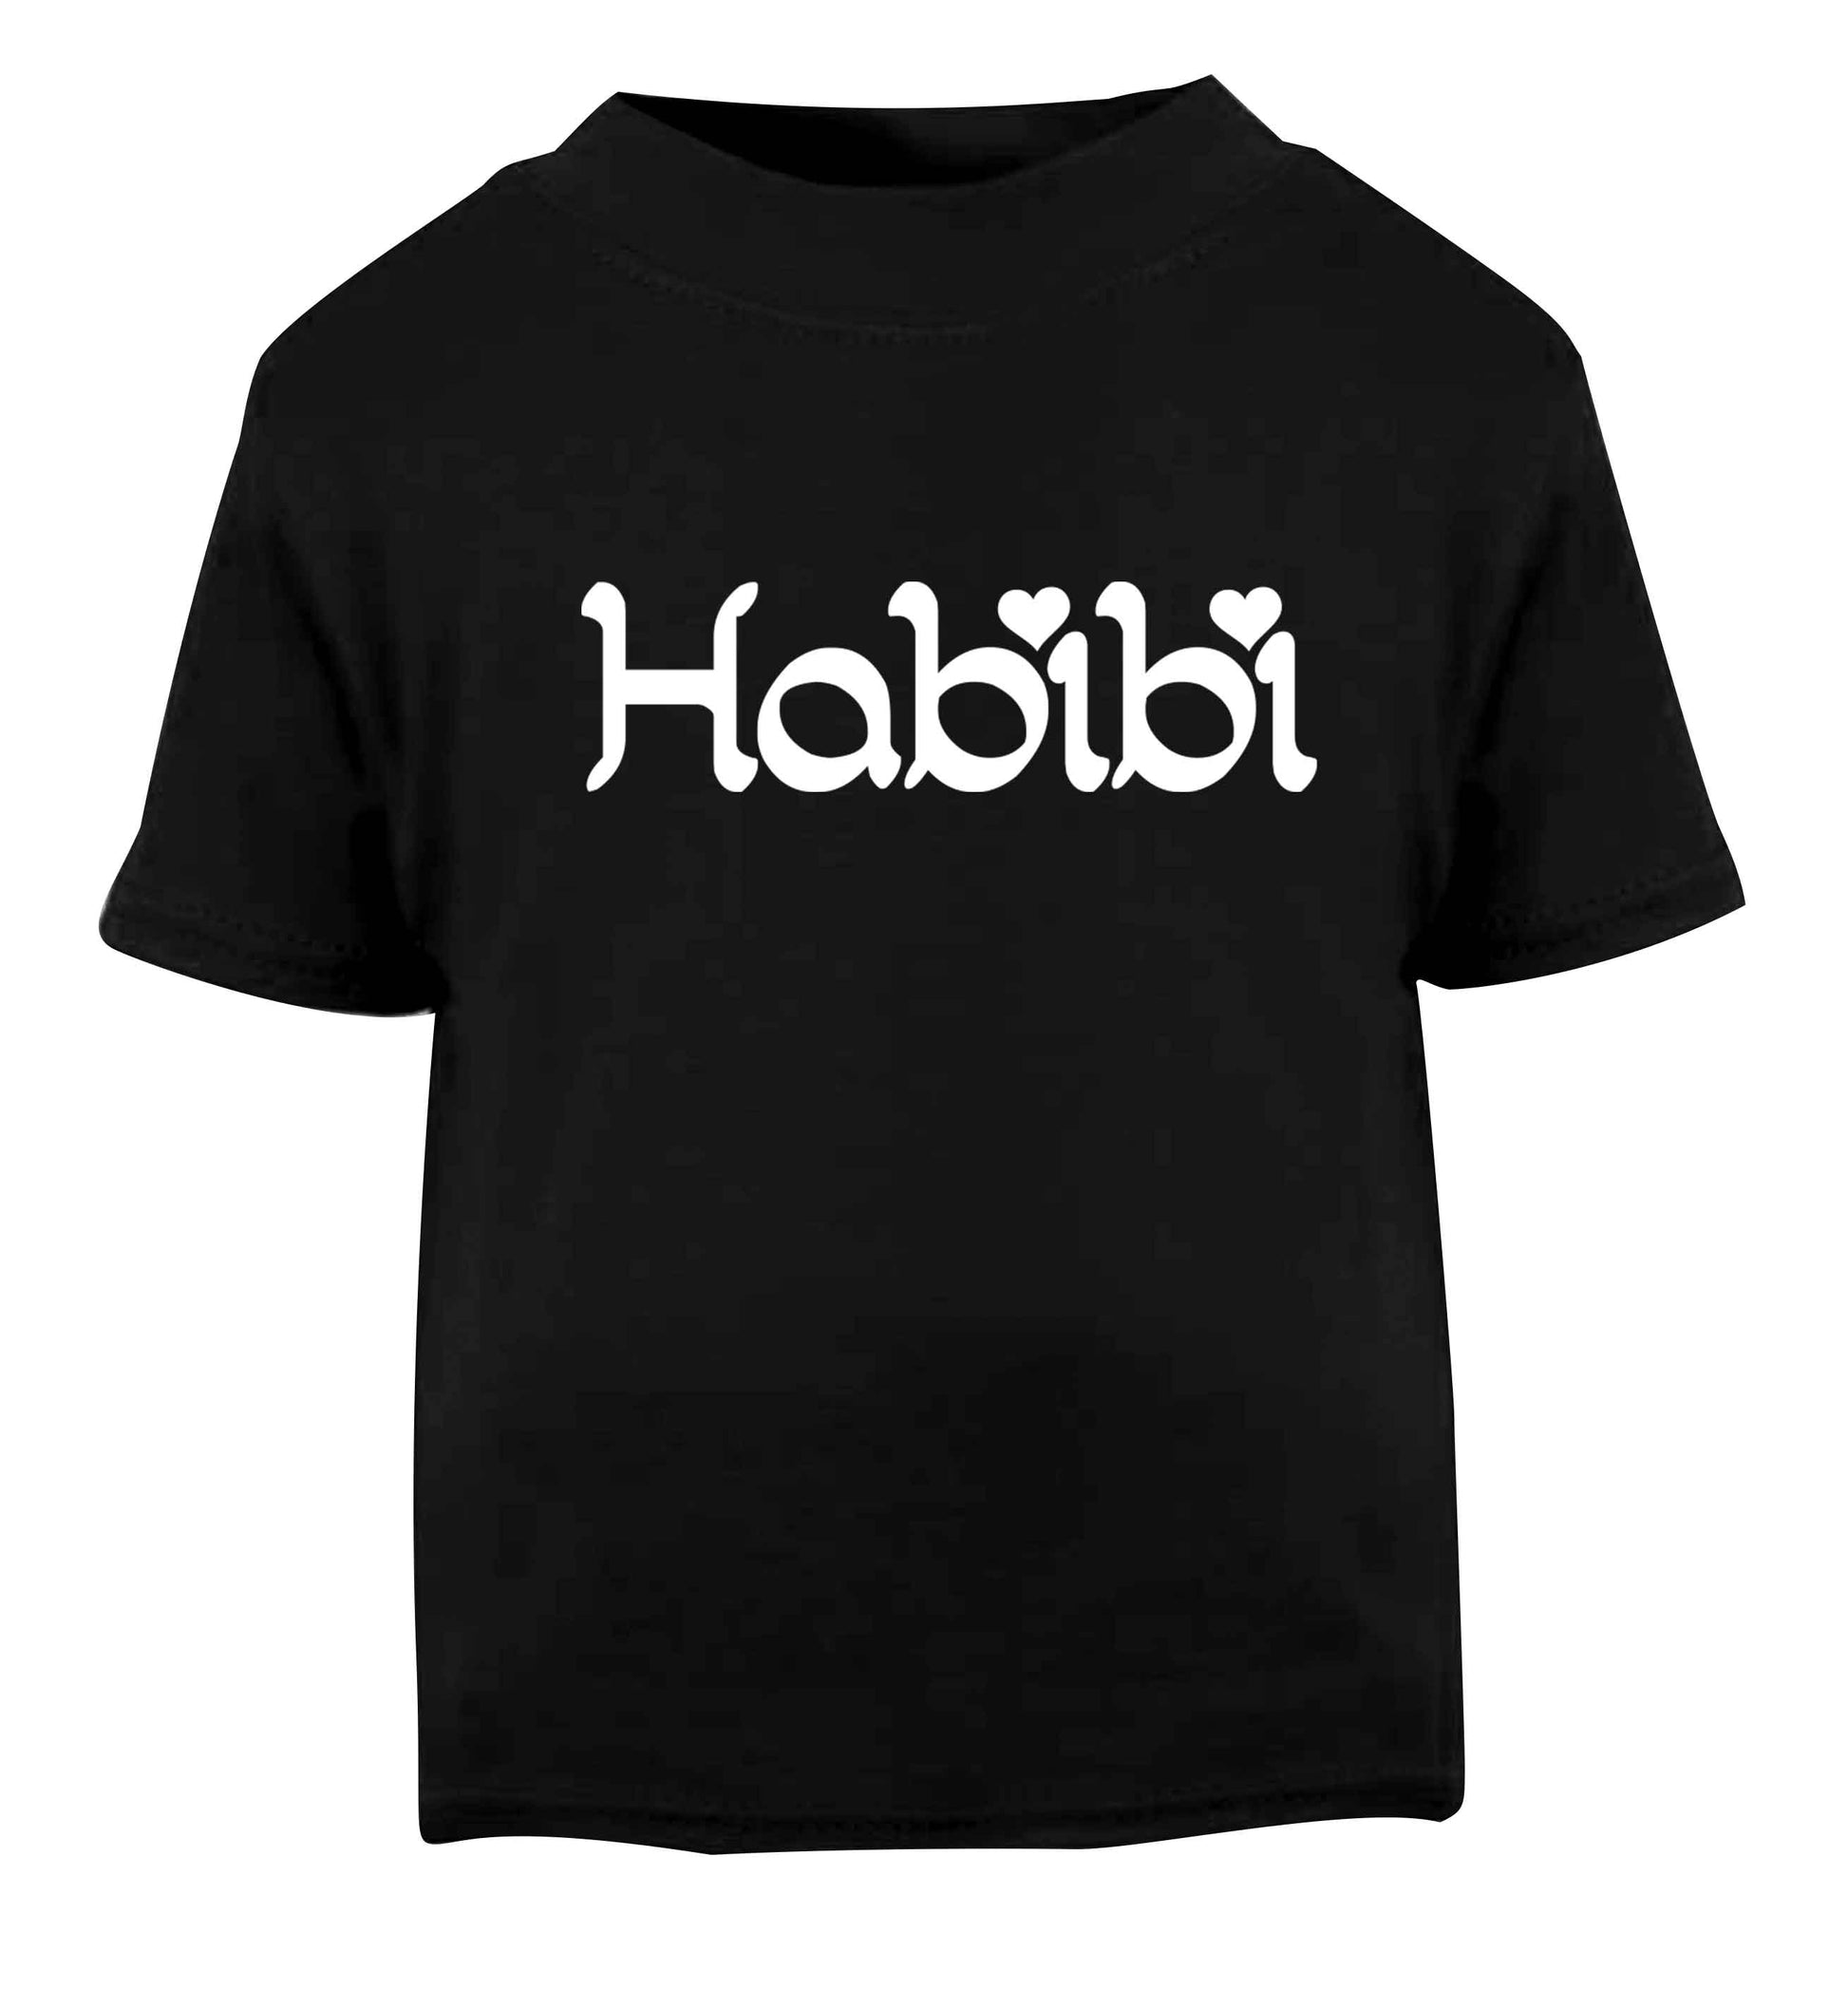 Habibi Black baby toddler Tshirt 2 years